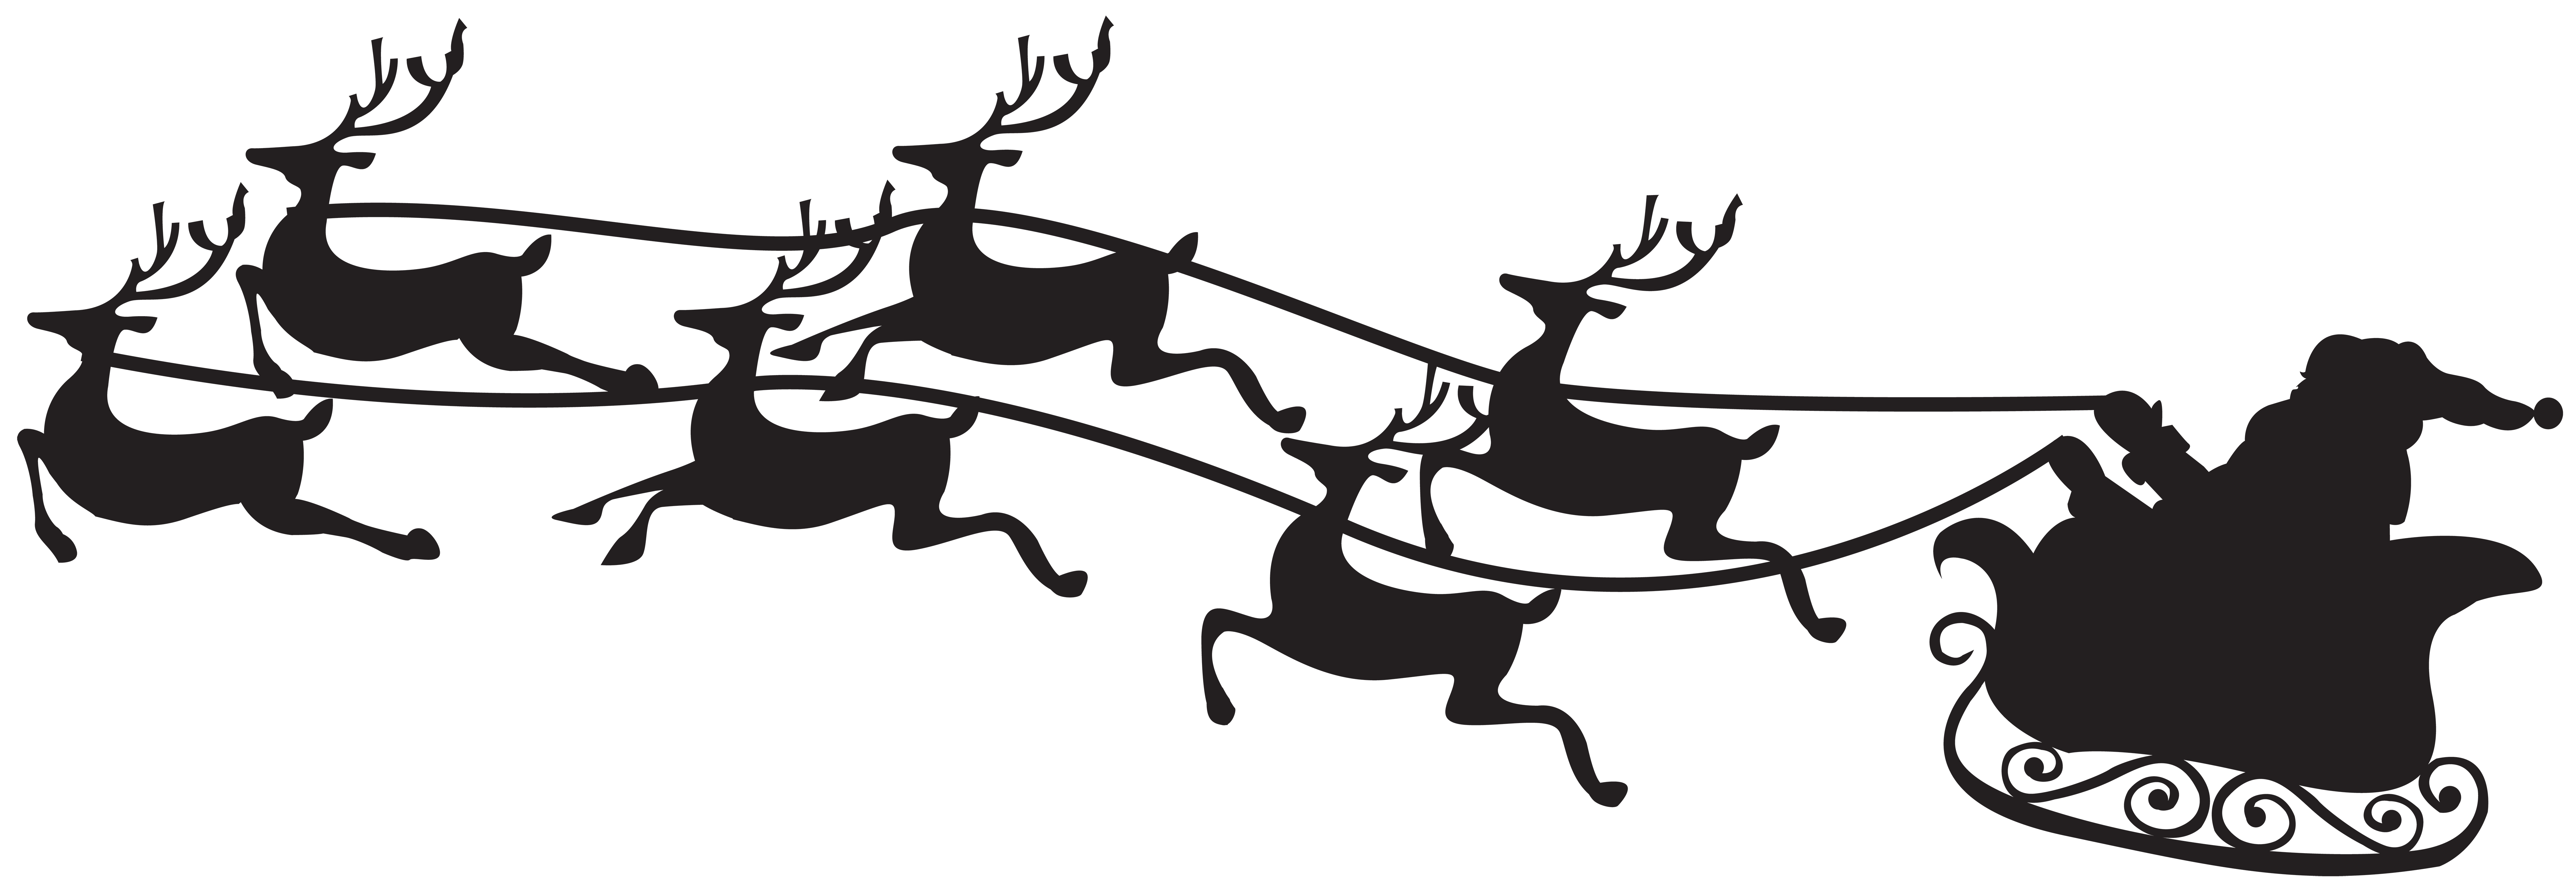 clipart reindeer silhouette